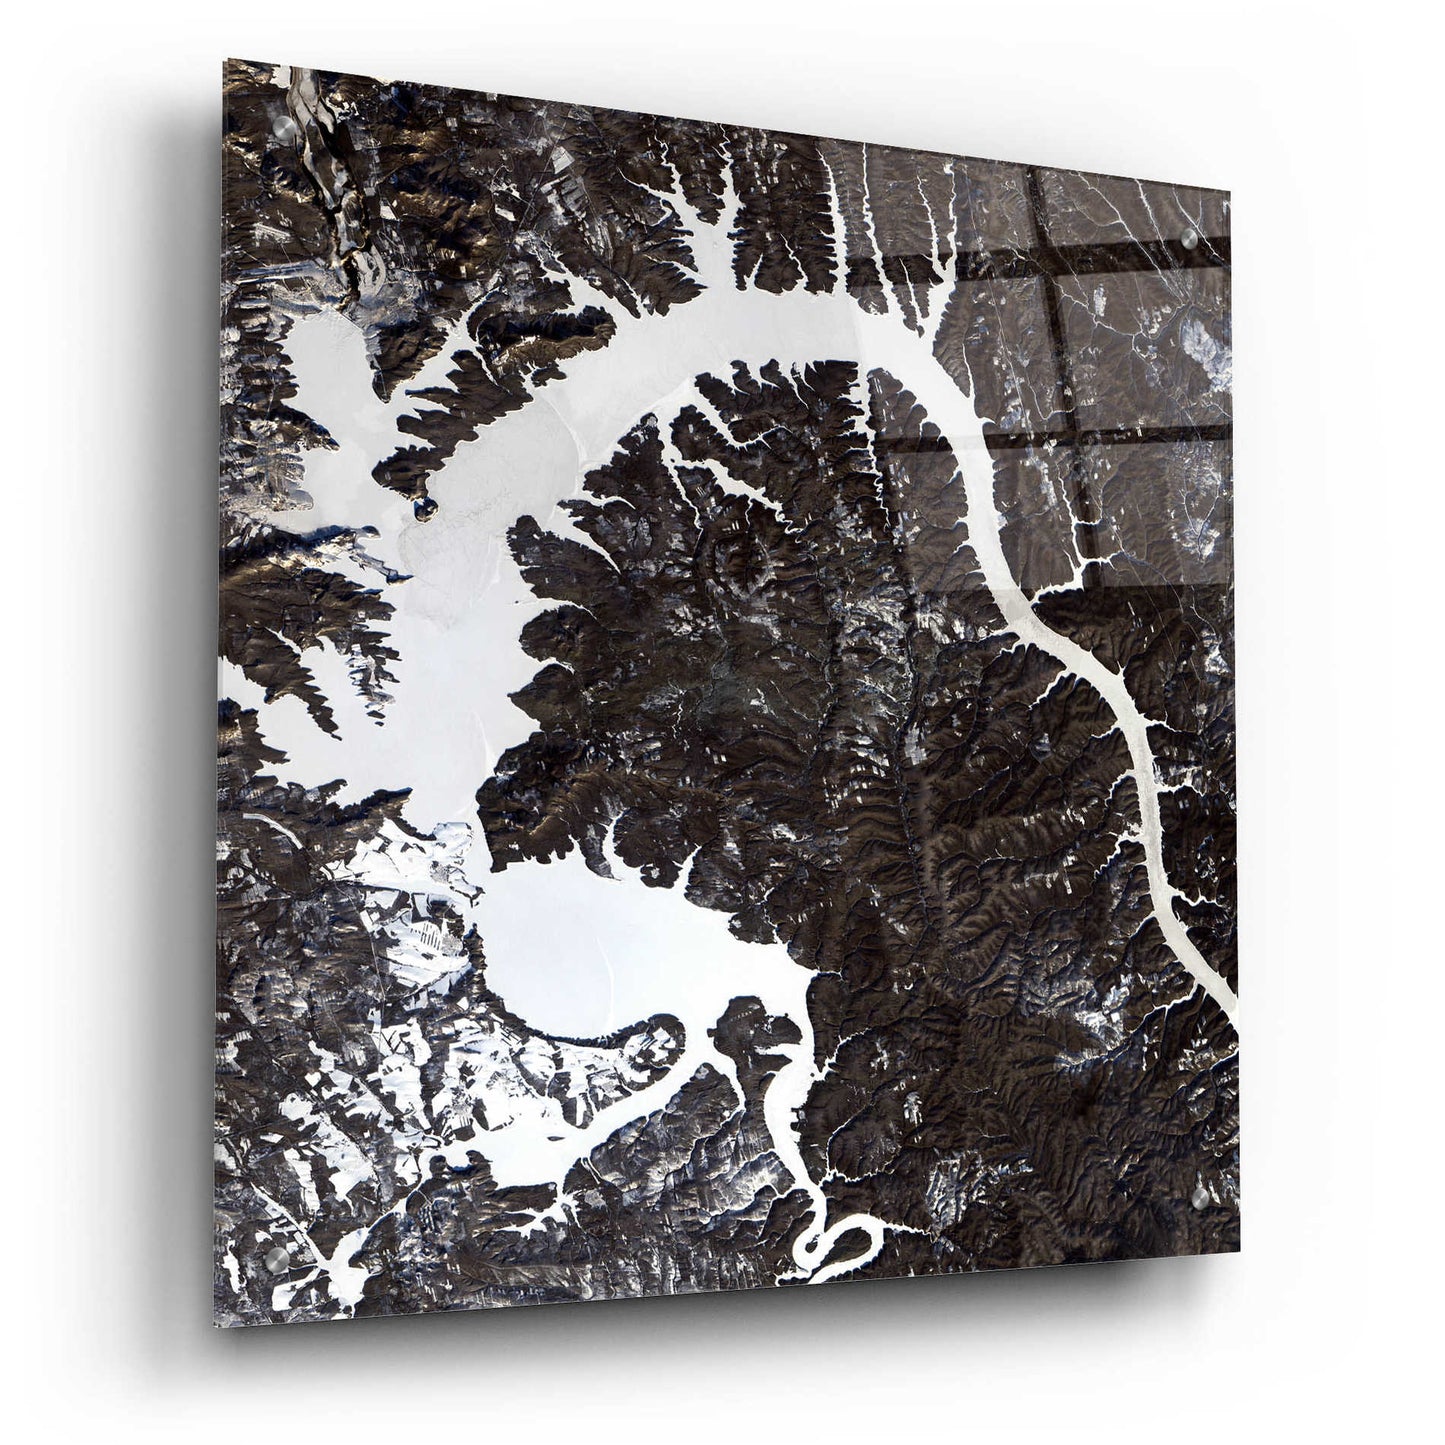 Epic Art 'Earth as Art: Dragon Lake' Acrylic Glass Wall Art,24x24